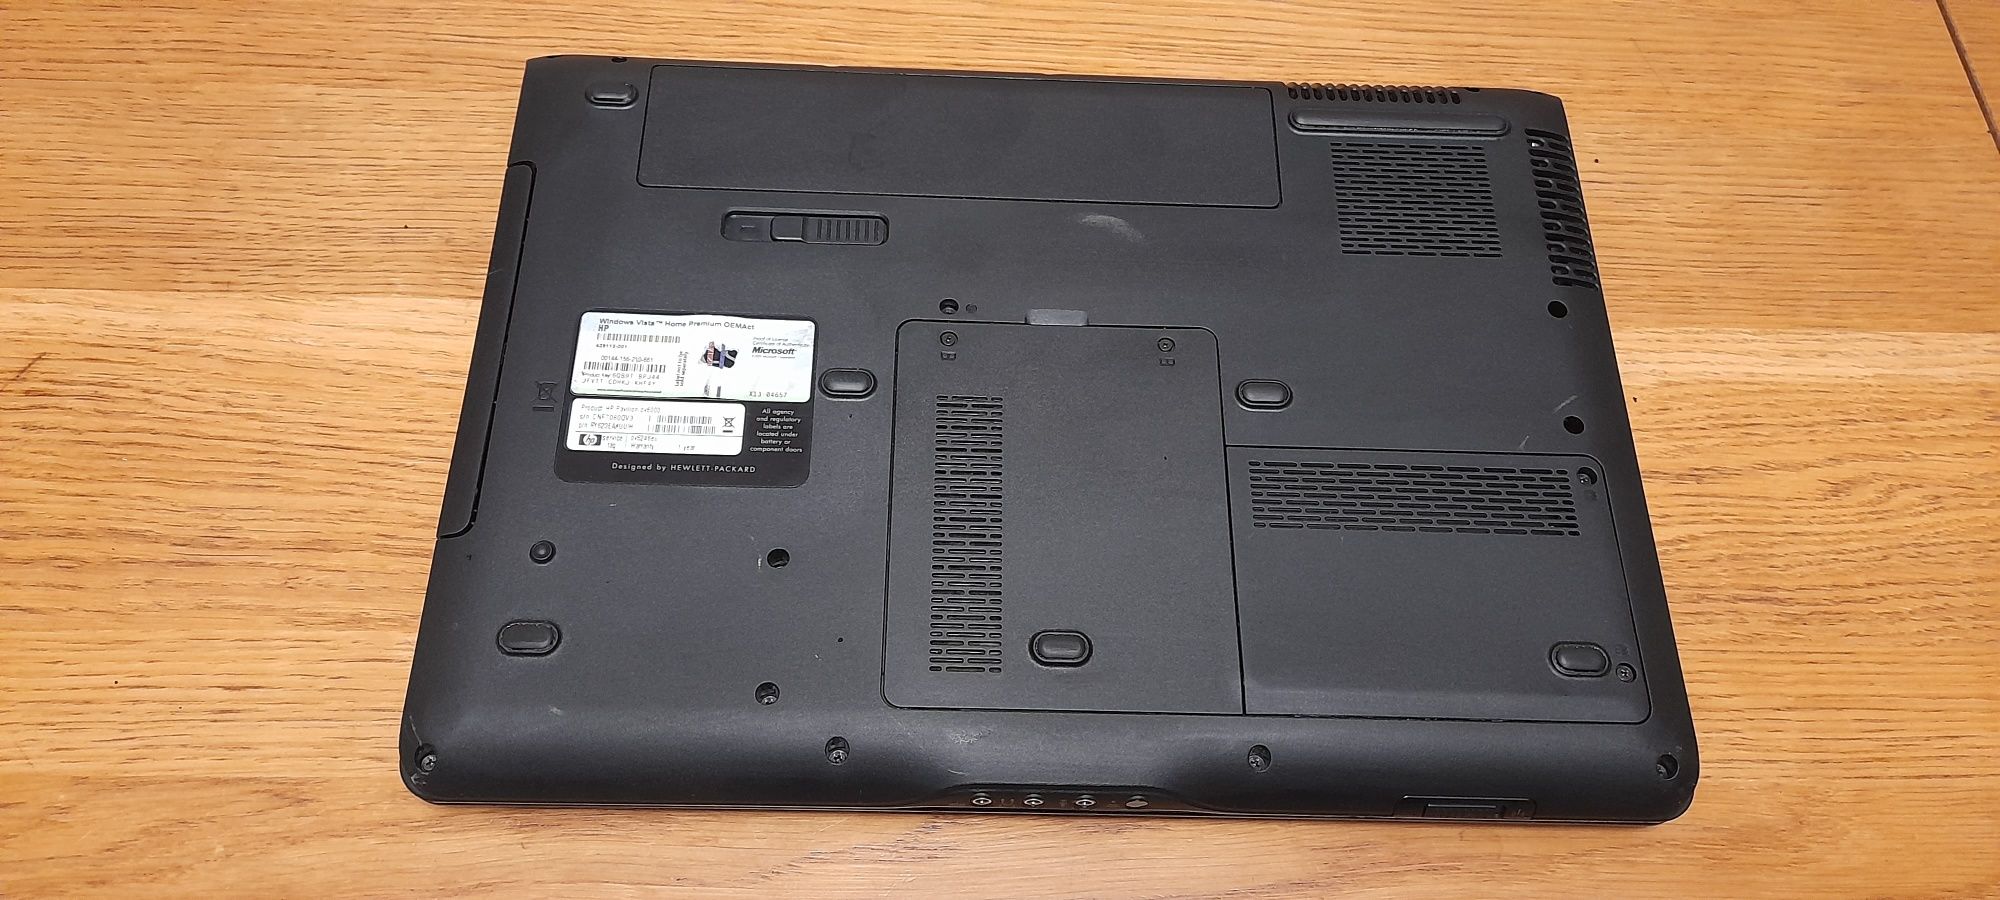 Laptop HP dv6000, 320GB